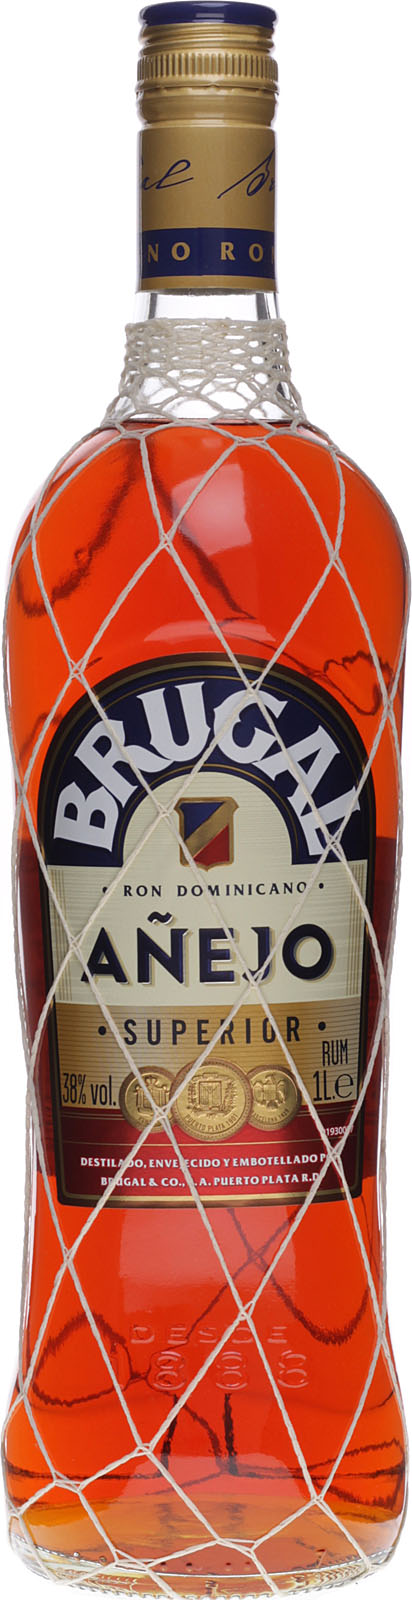 Brugal Ron Añejo Superior (5 38% Jahre) Liter 1